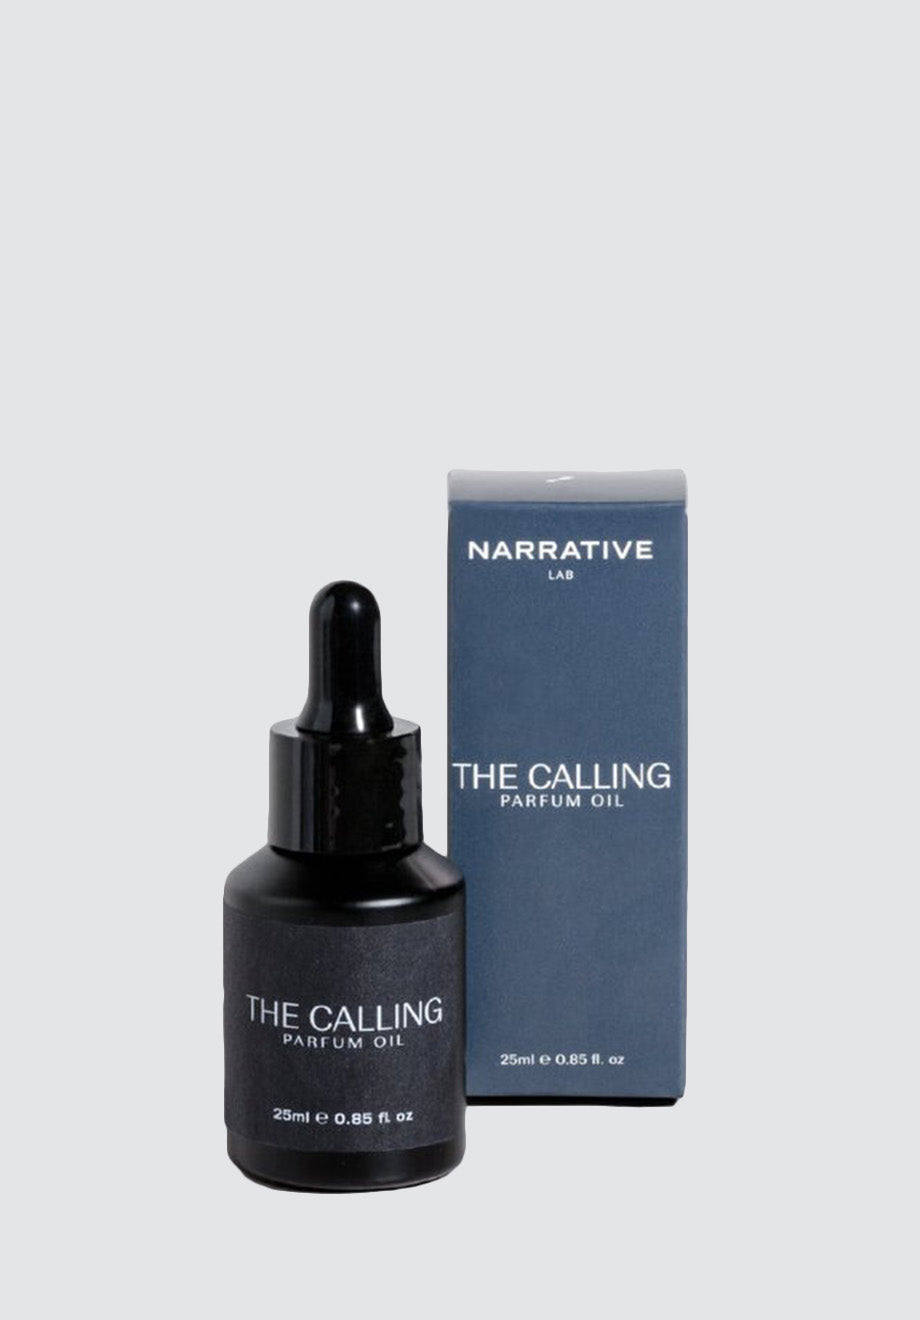 The Calling Parfum Oil in Dropper Bottle